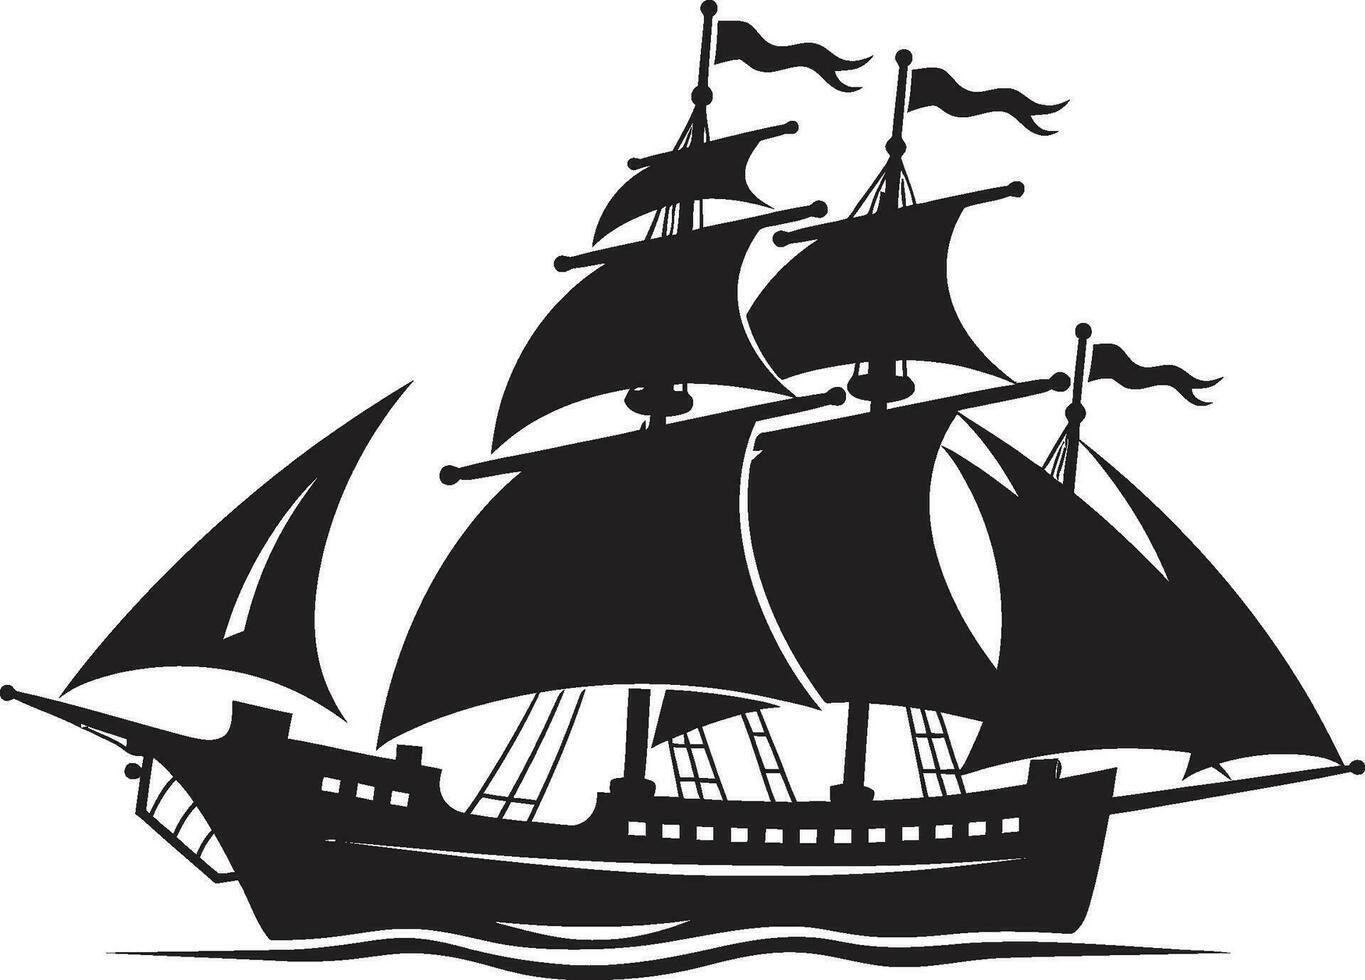 Historic Galleon Black Ship Emblem Aged Odyssey Vector Ancient Ship